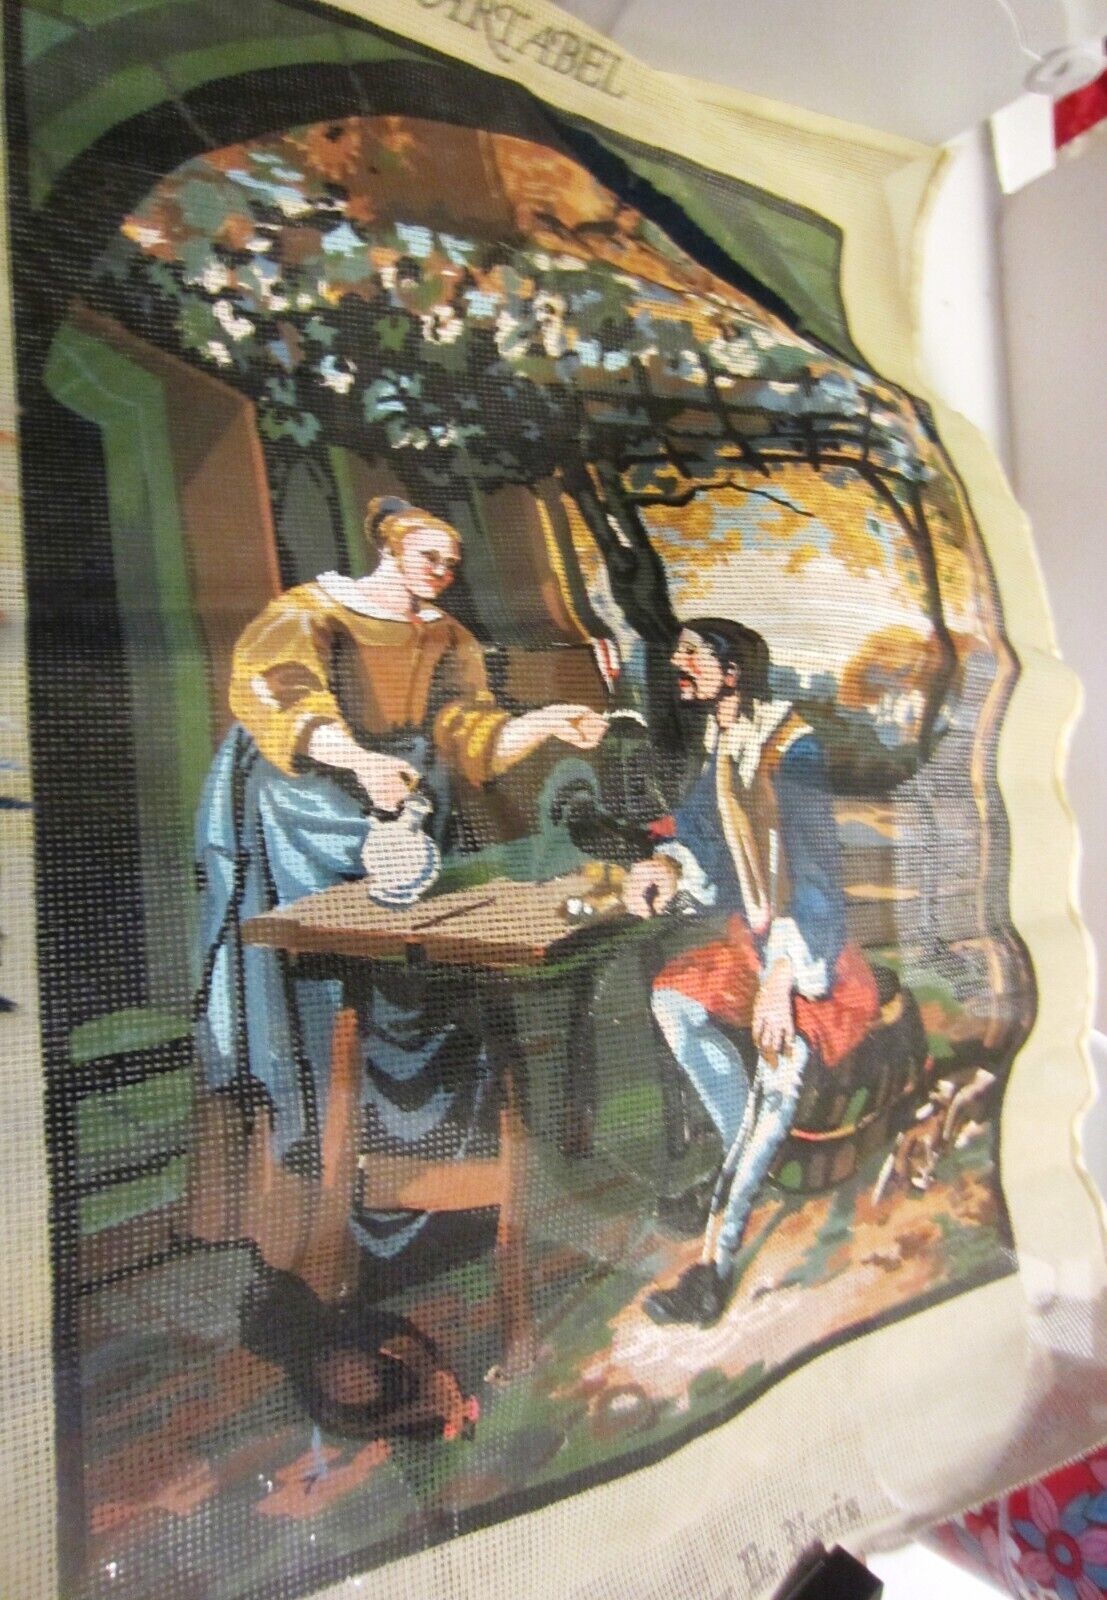 Primary image for Fleur de Paris Needlepoint Canvas Seventeenth century tavern scene